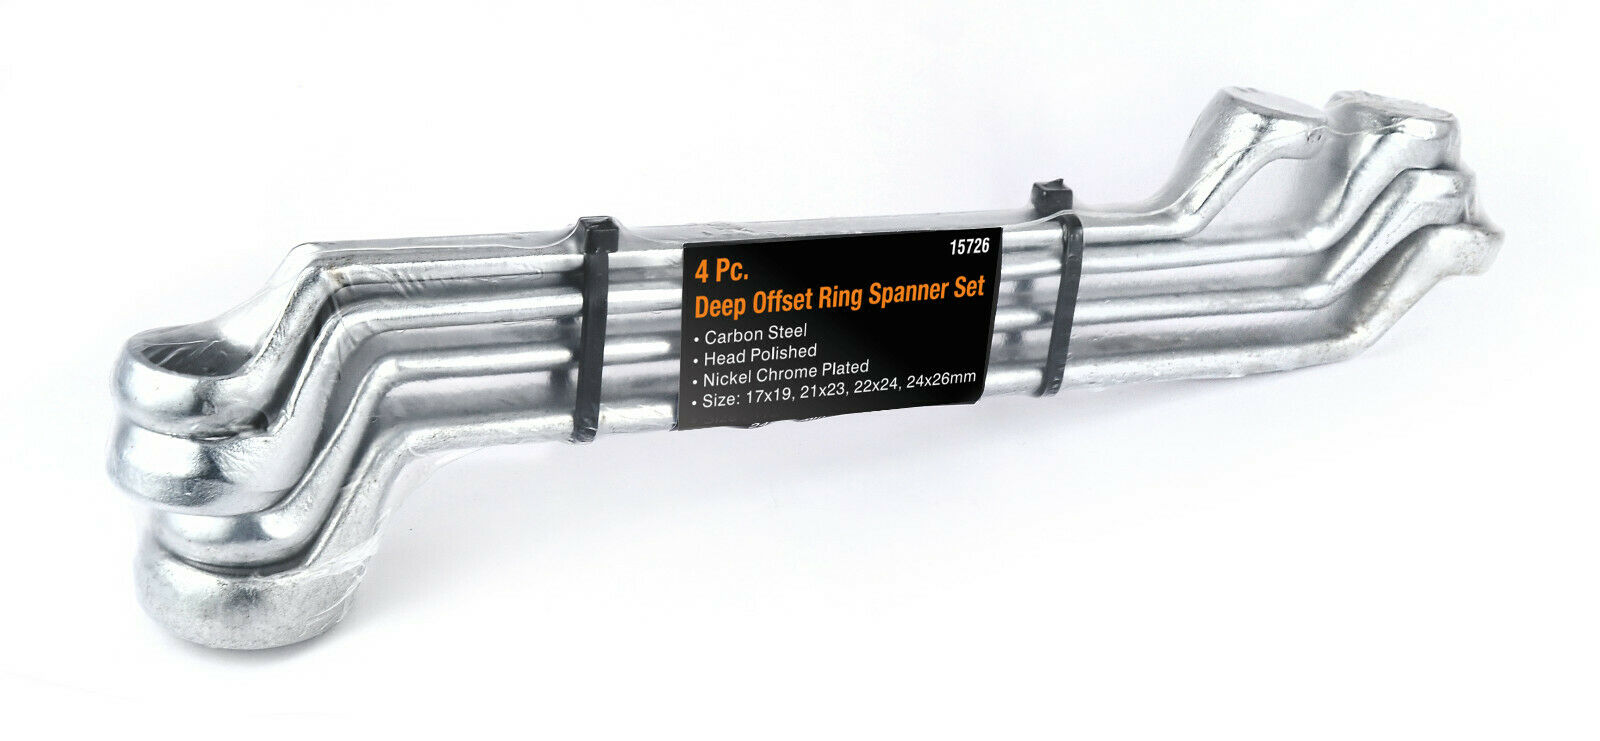 Tools XP 4 Piece Metric Deep Offset Ring Spanner Set Tool Kit Carbon Steel